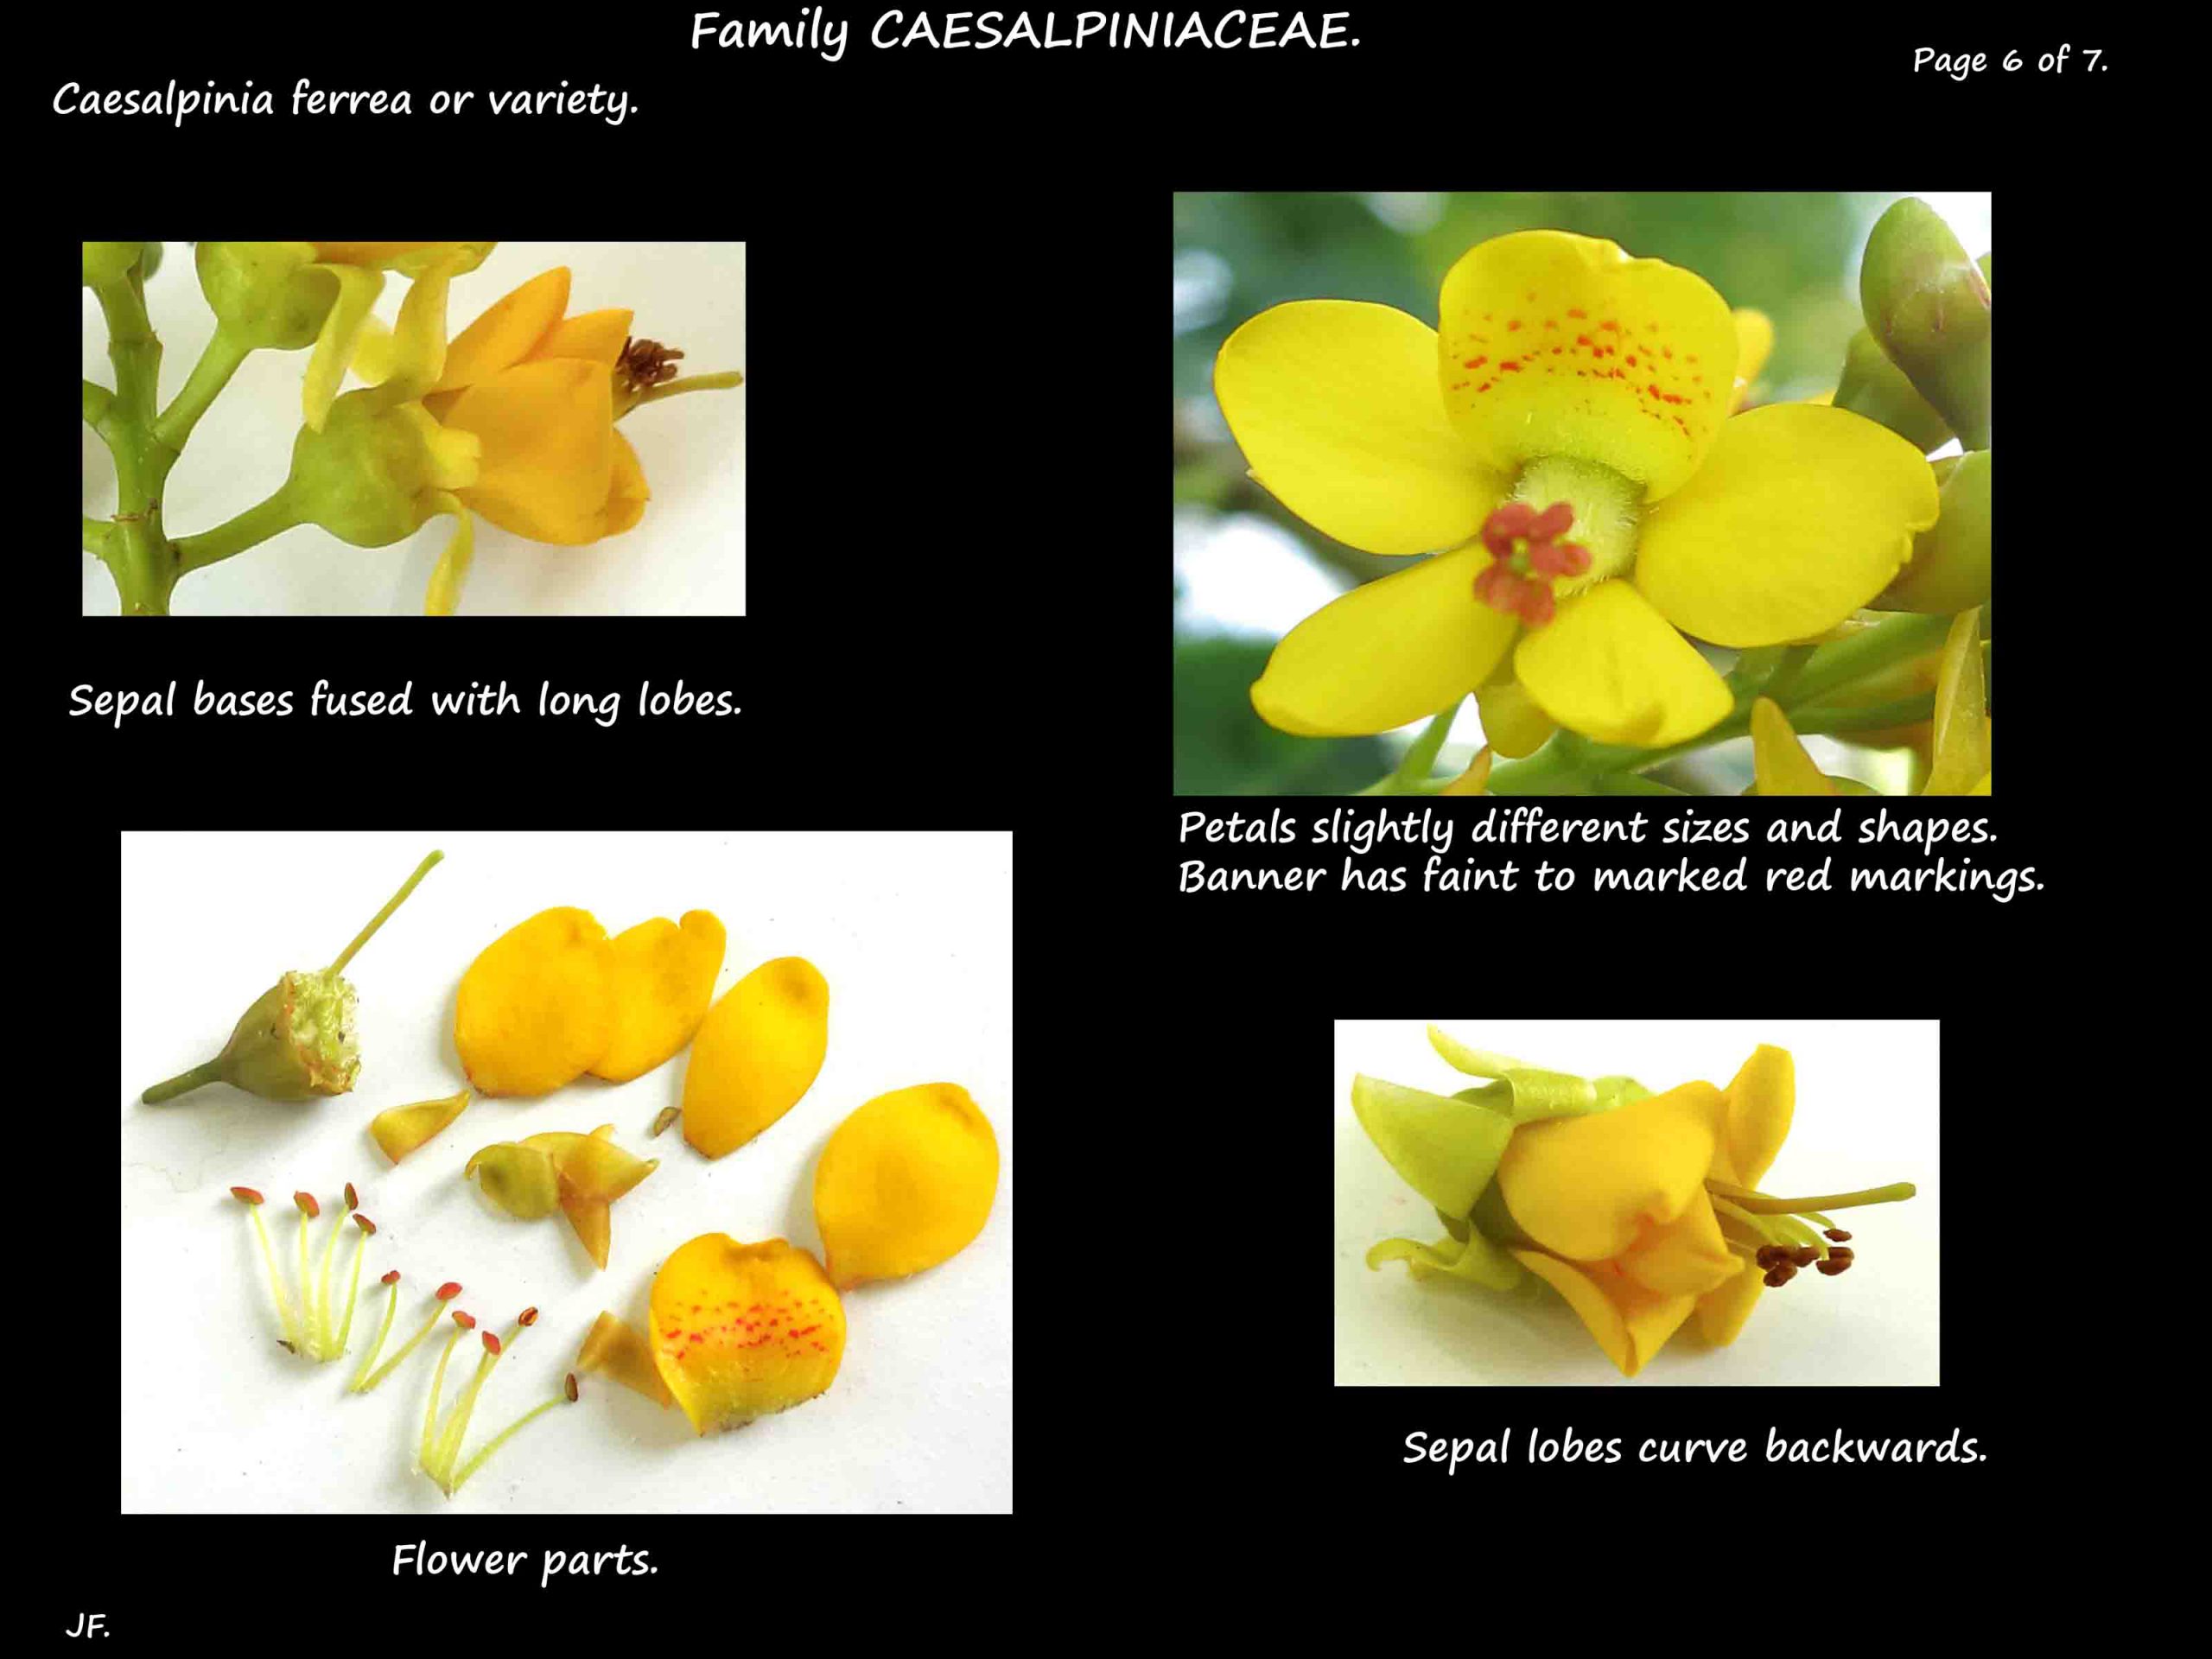 6 Caesalpinia ferrea flowers